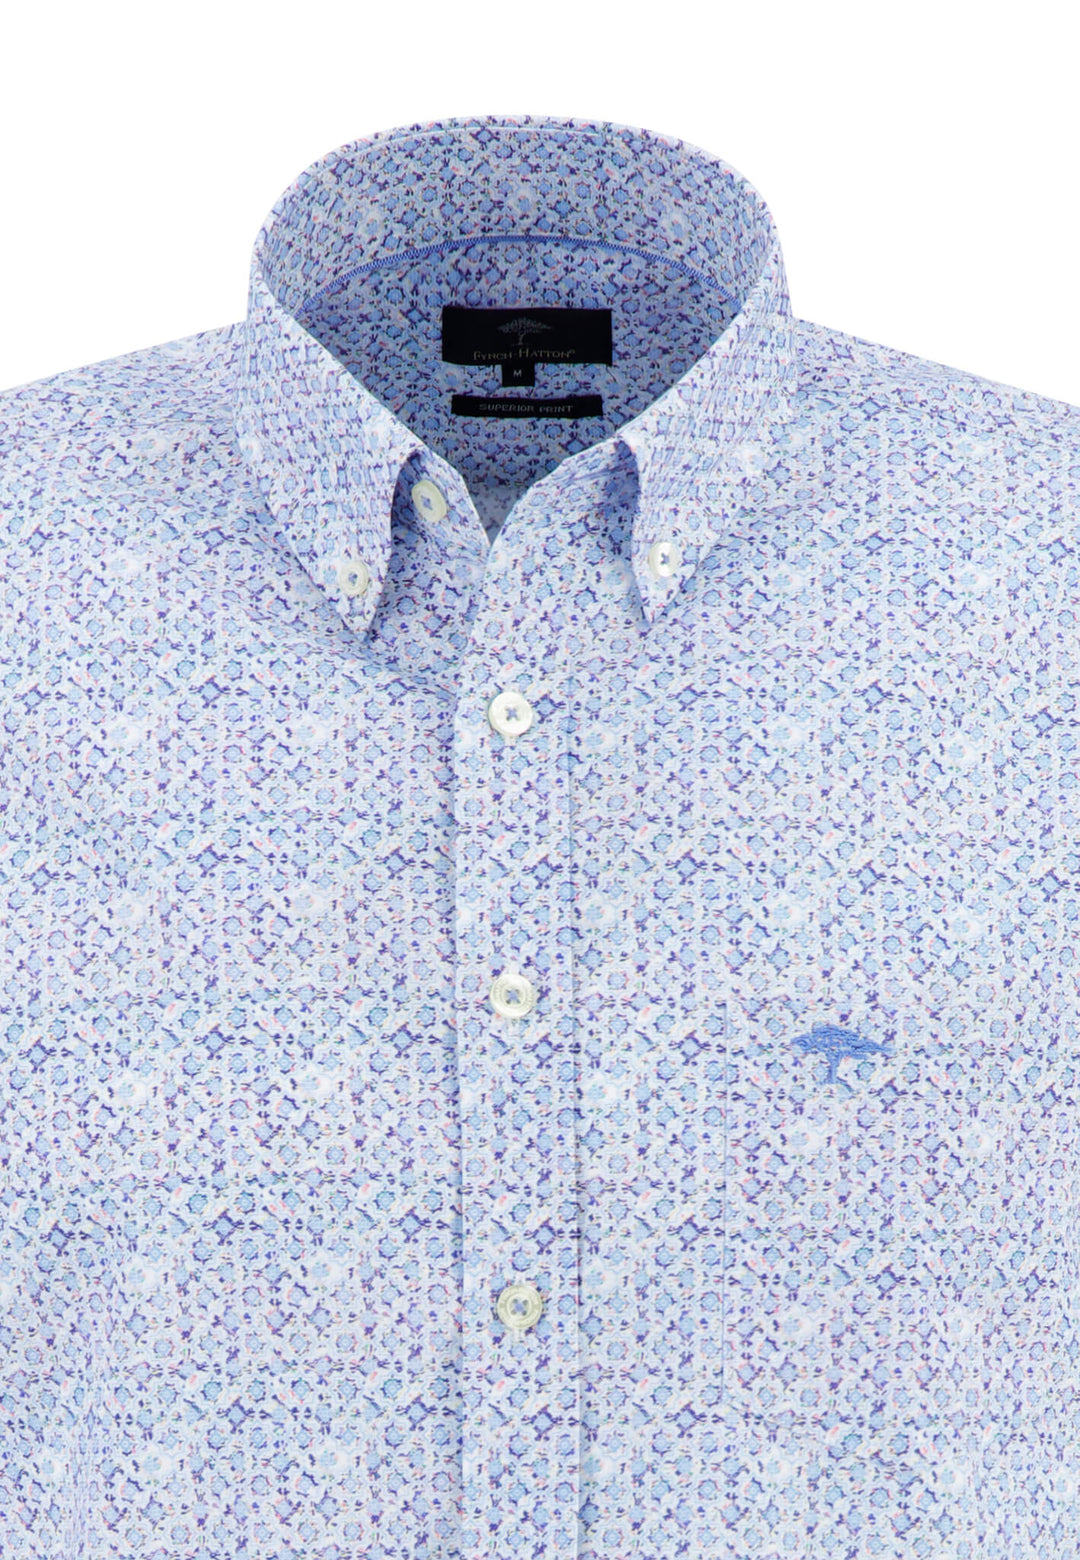 Offizieller Shop Shirt – Print Superior Online | FYNCH-HATTON Cotton